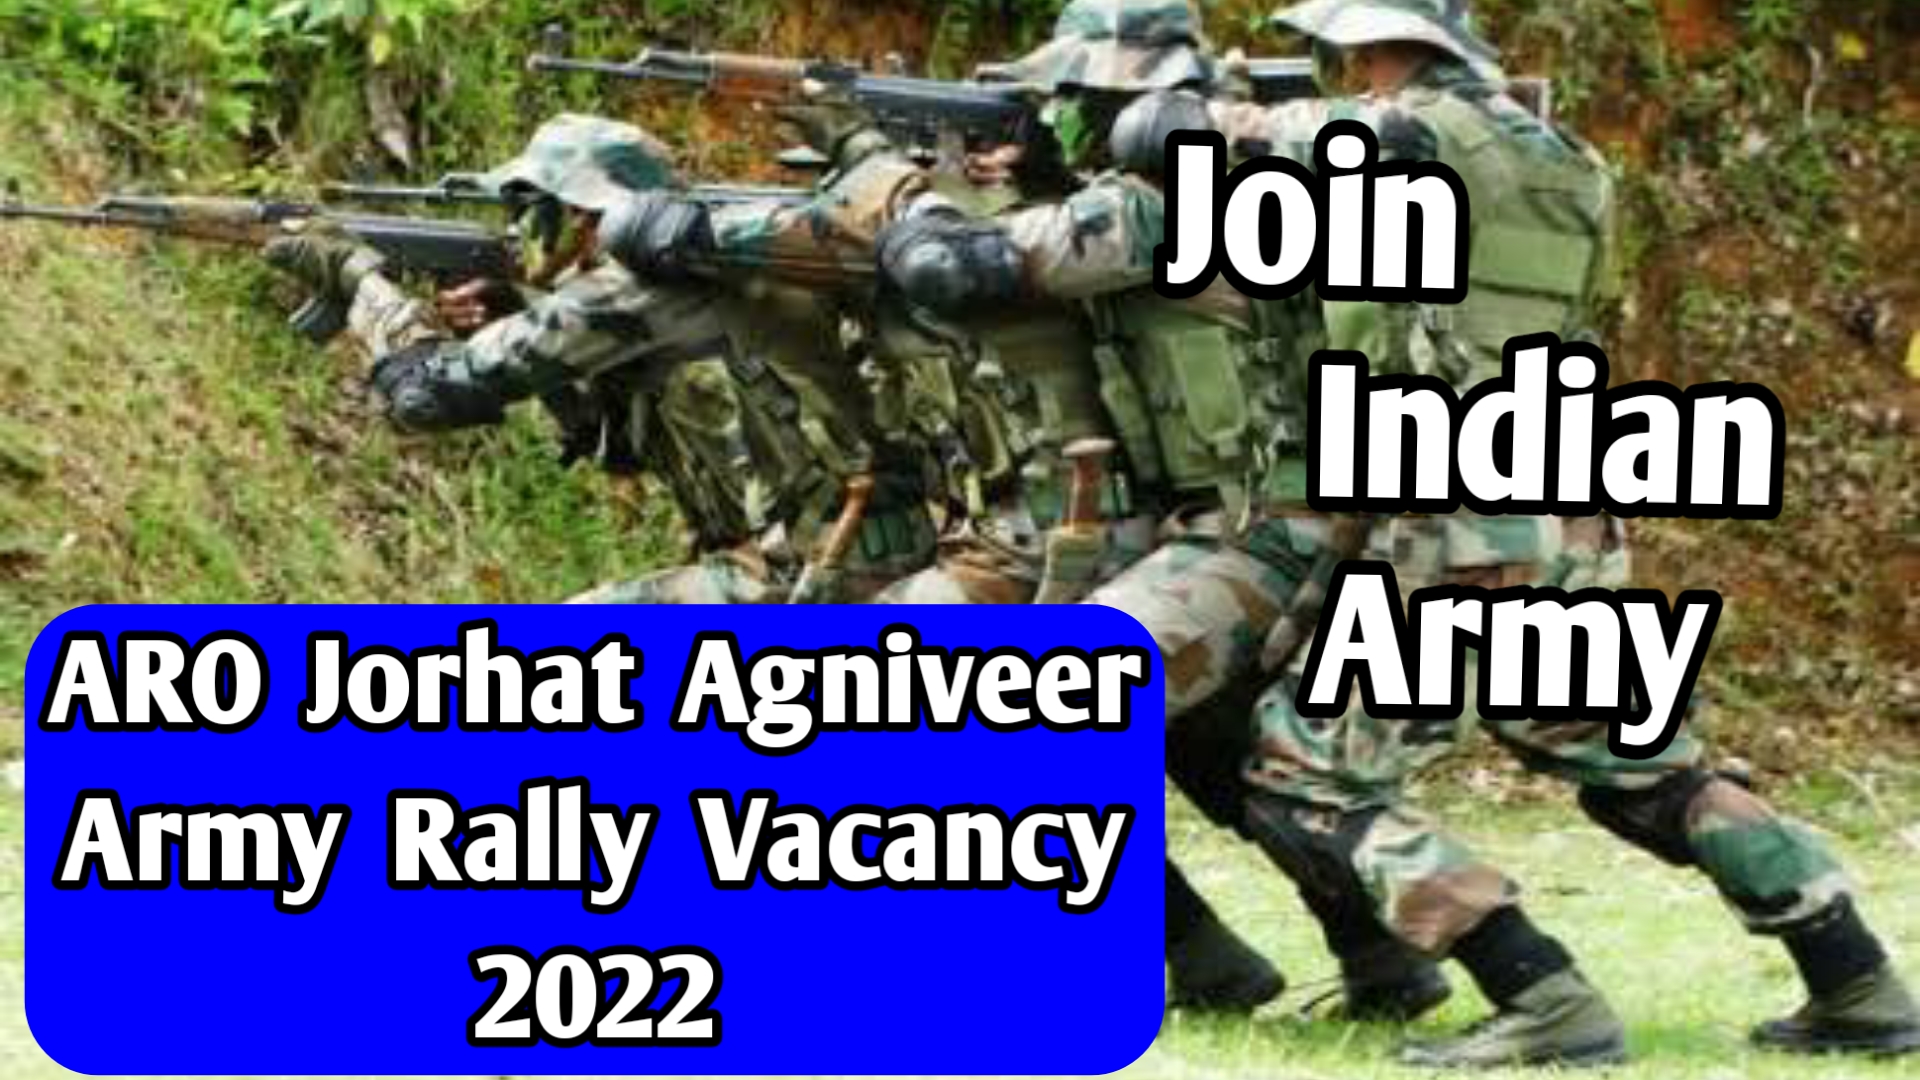 ARO Jorhat Agniveer Army Rally Vacancy 2022